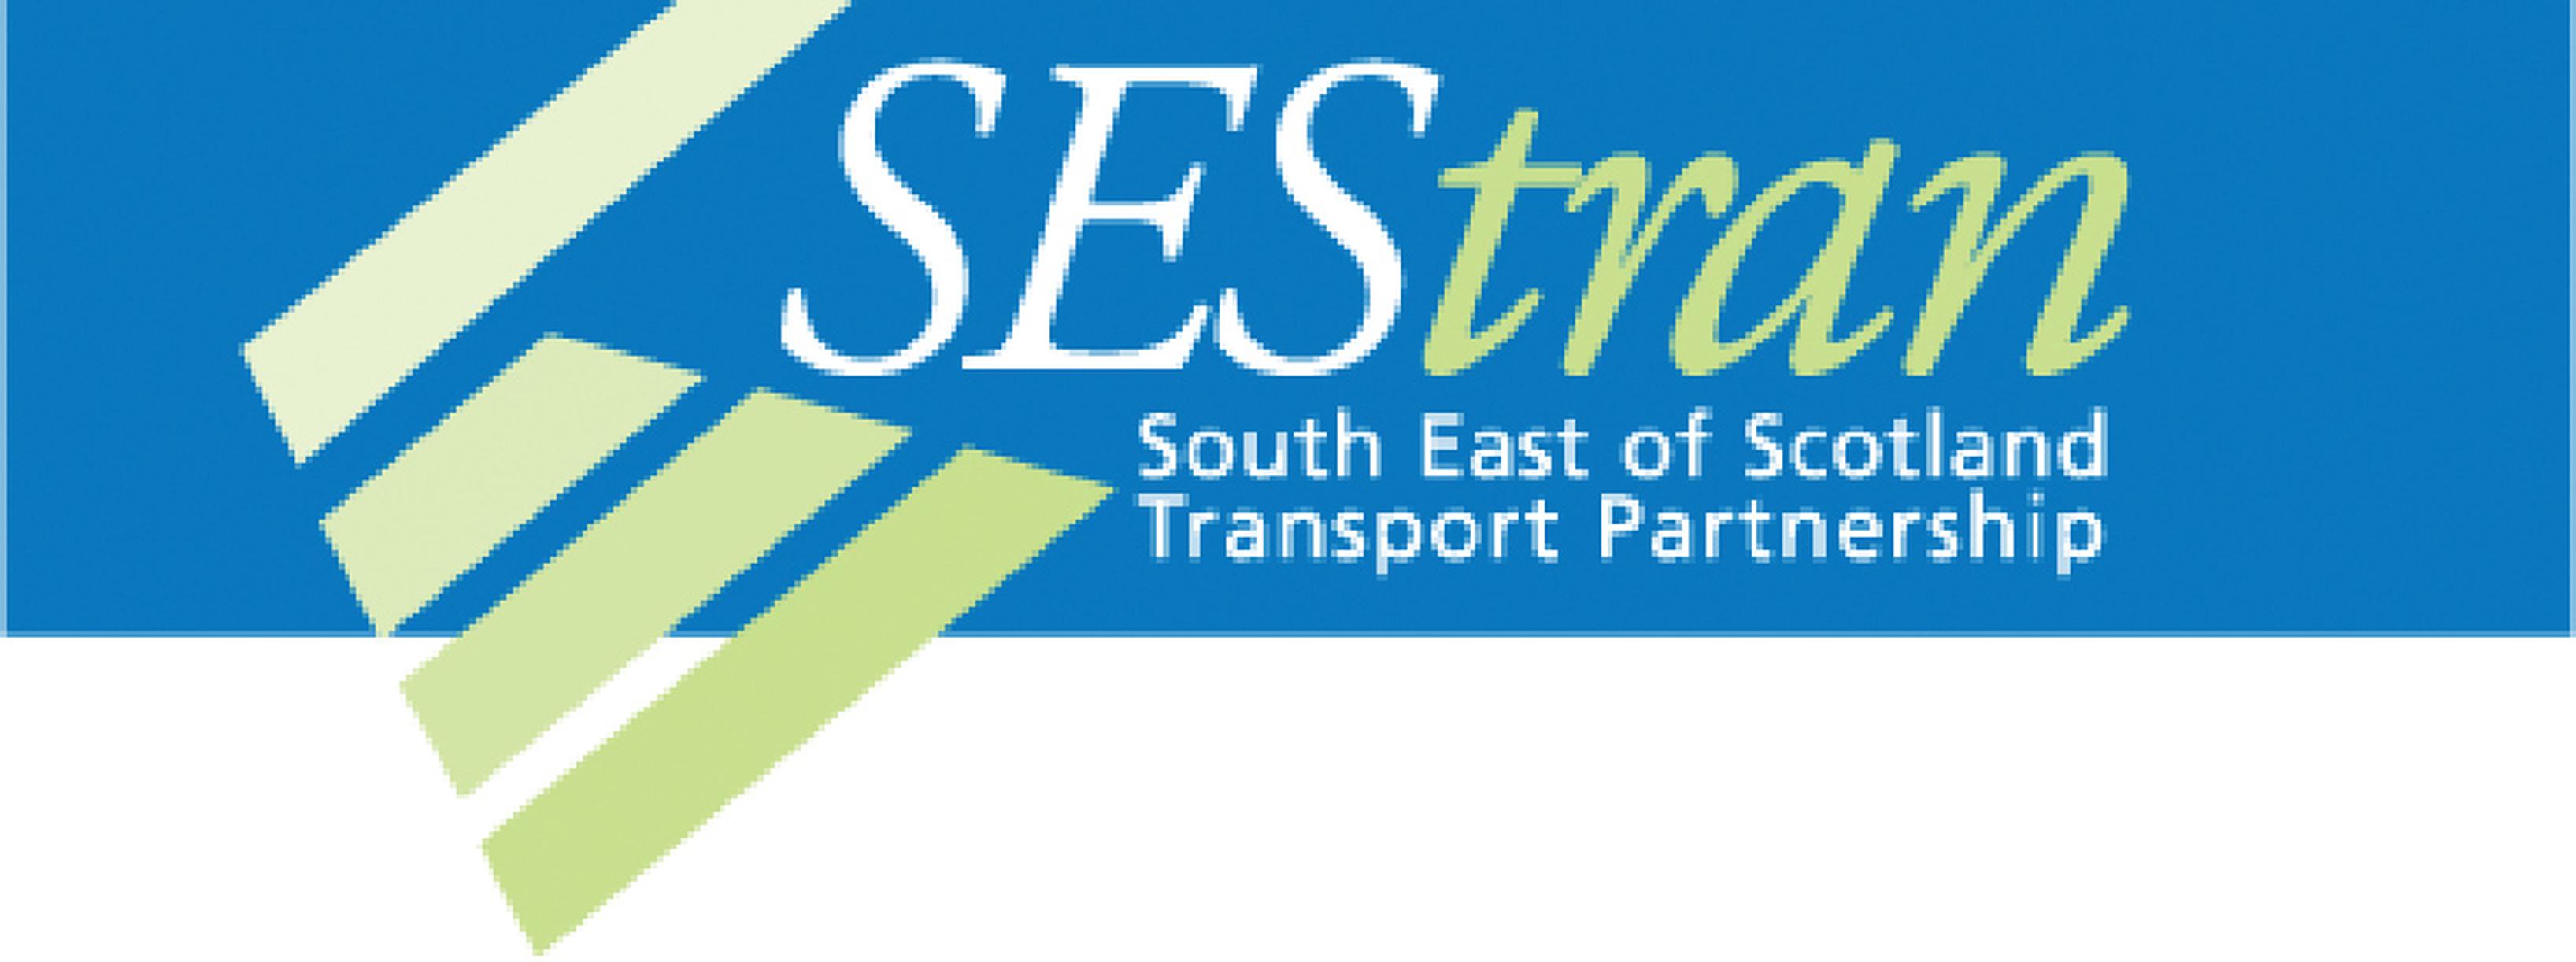 SEStran’s future has been decoupled from City Deal talks